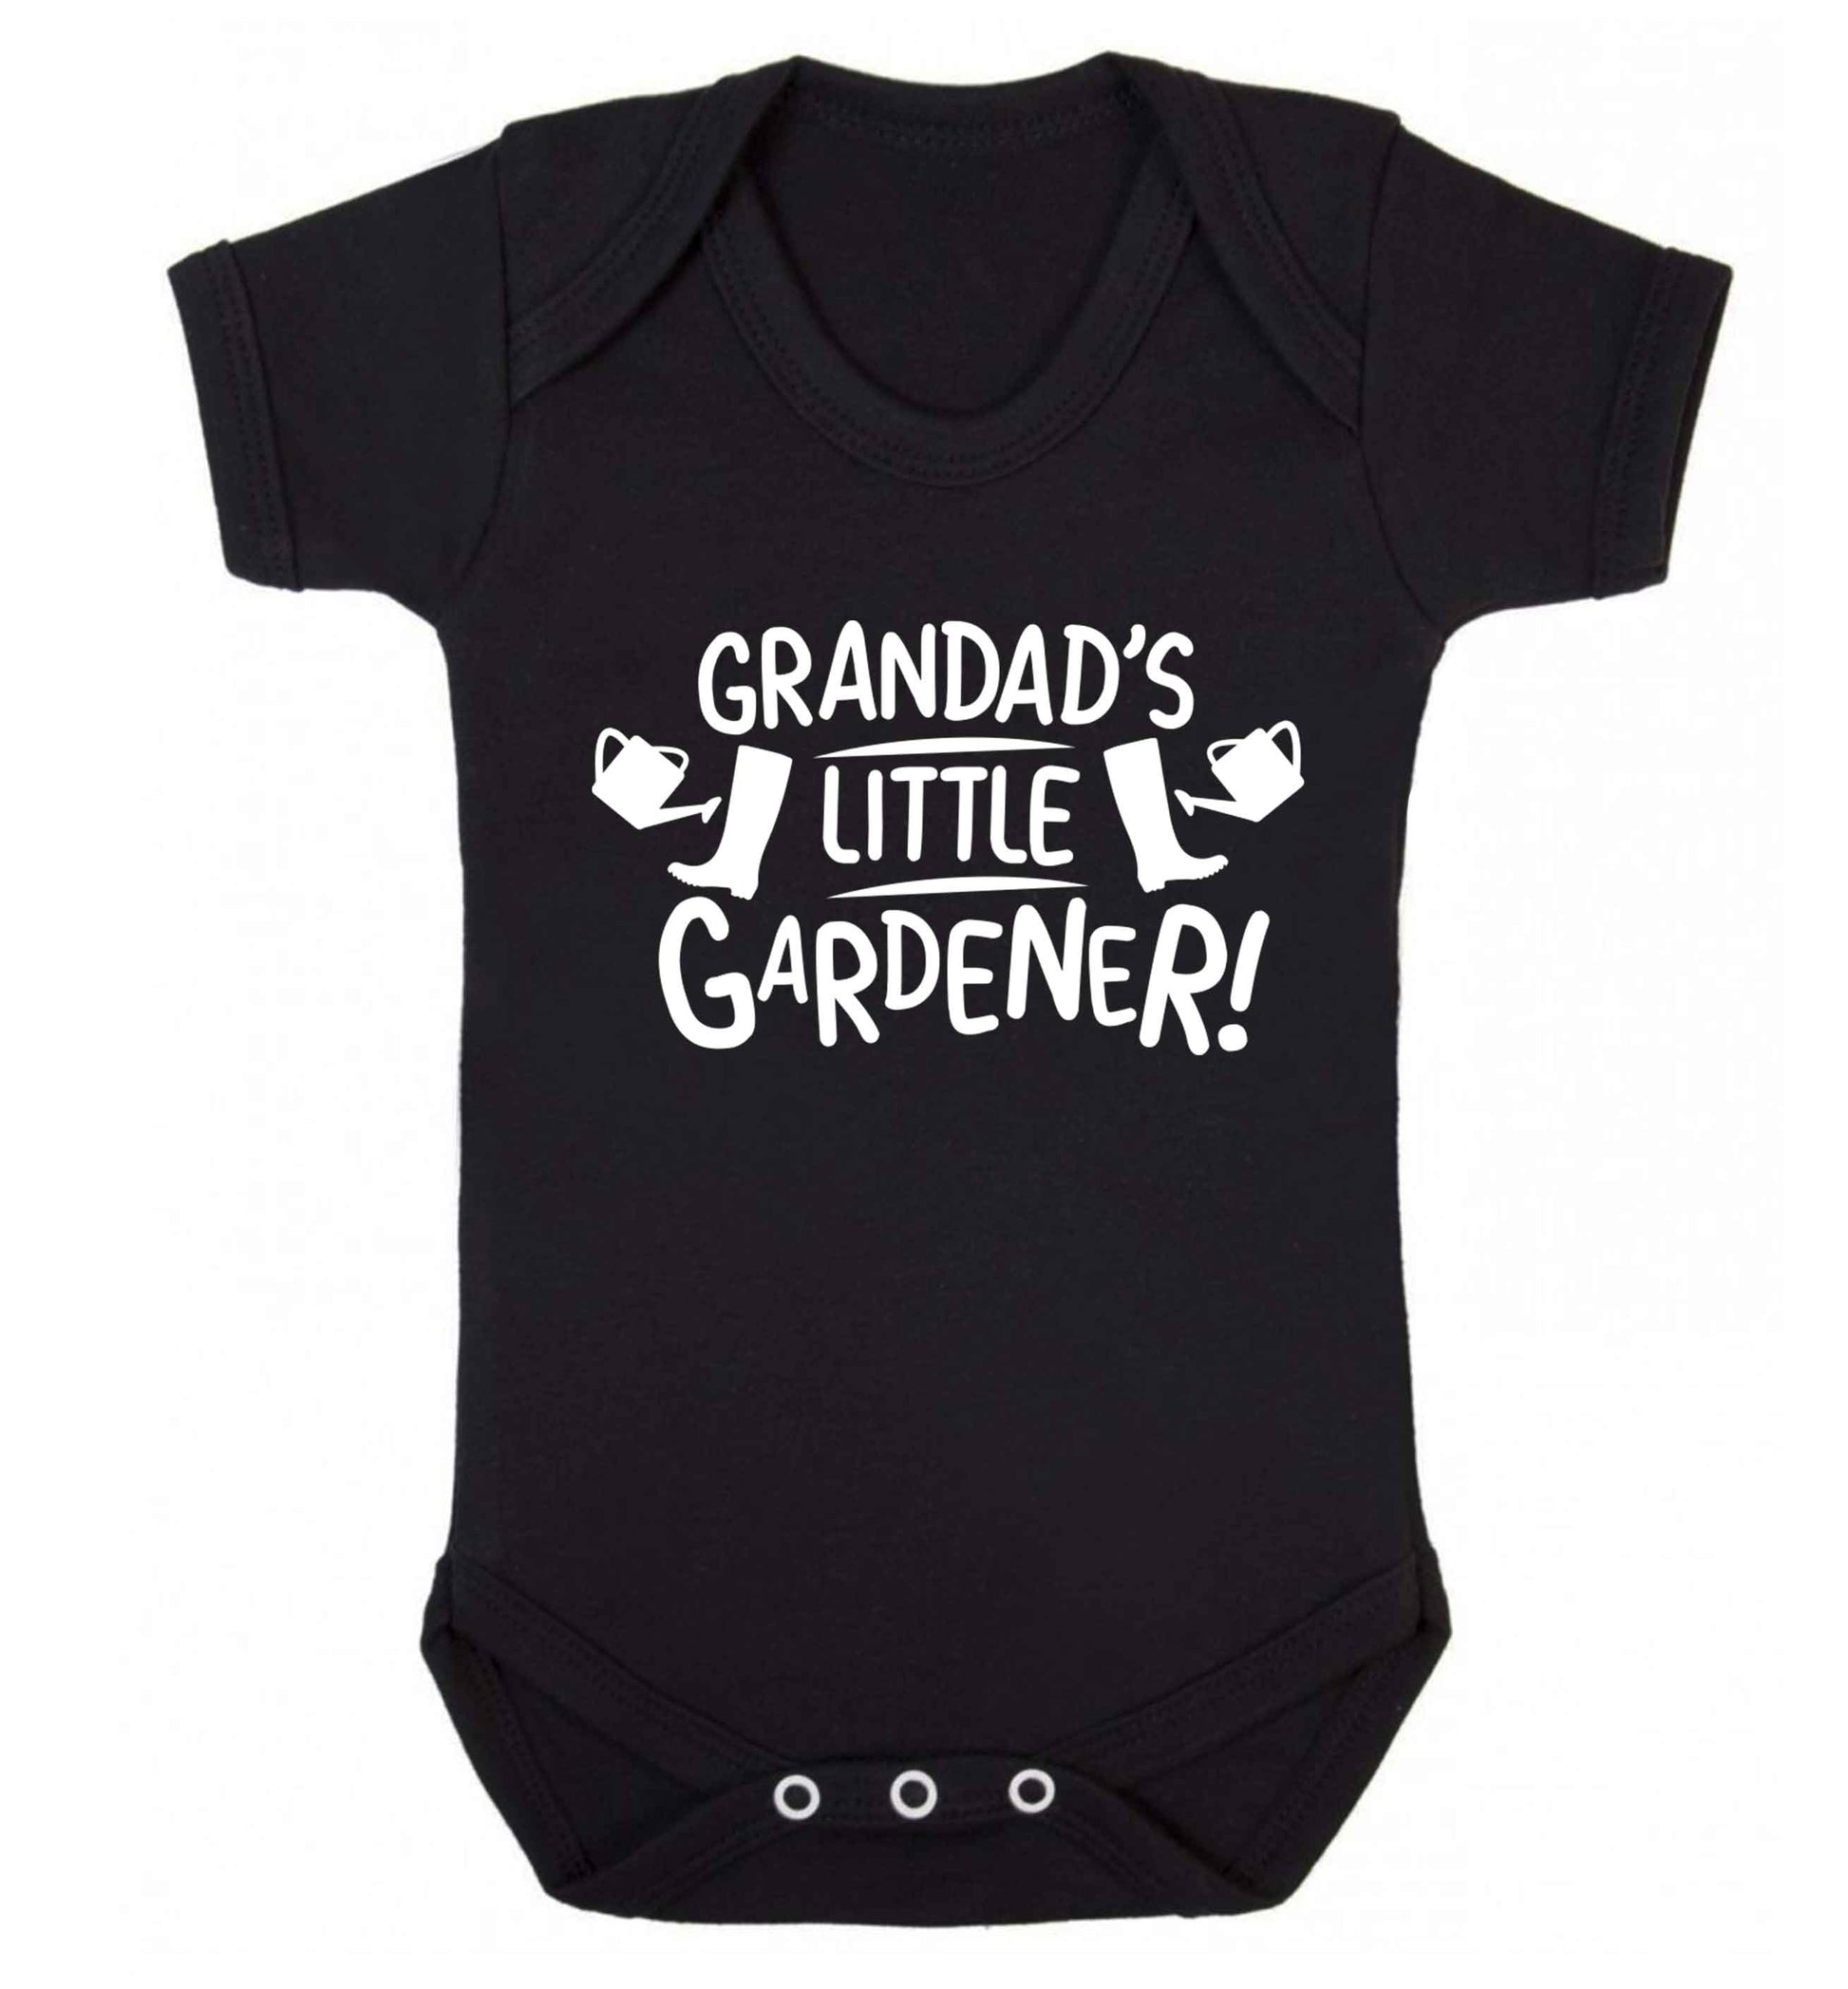 Grandad's little gardener Baby Vest black 18-24 months